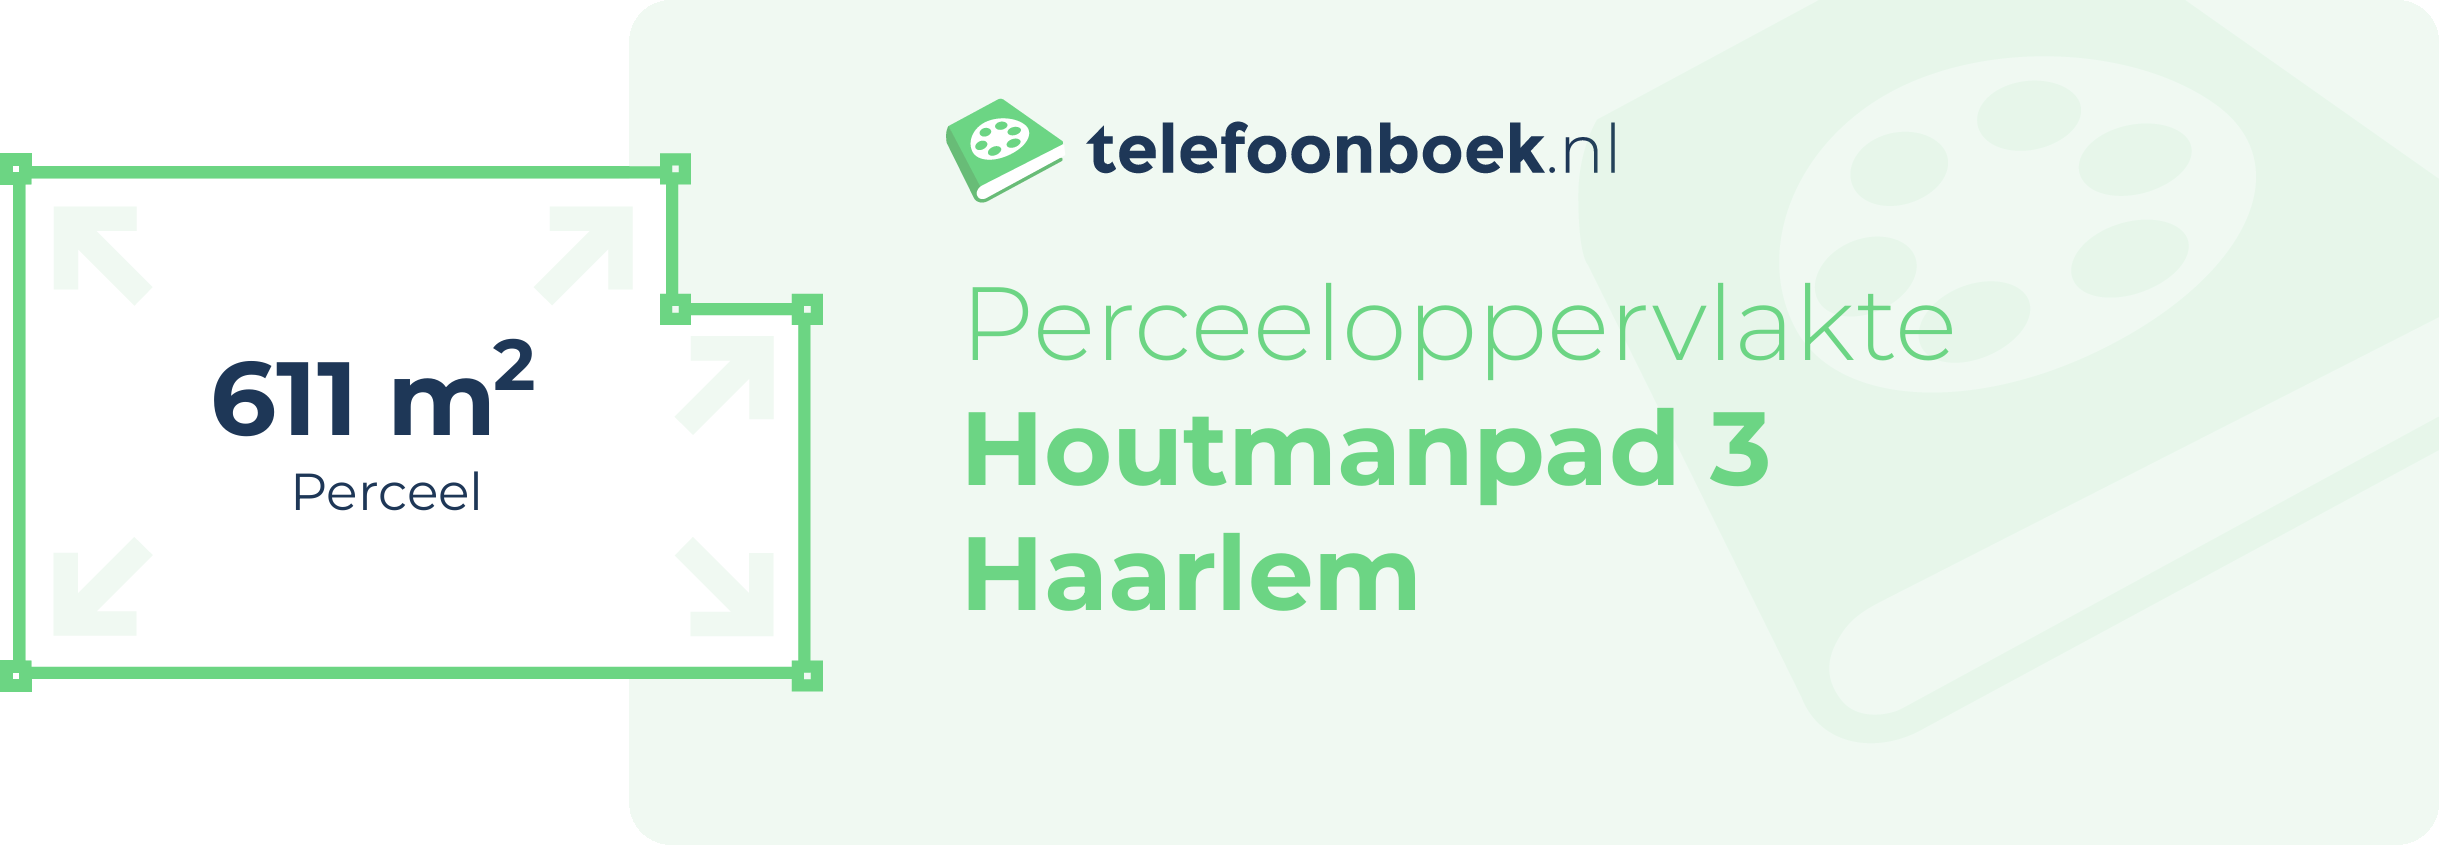 Perceeloppervlakte Houtmanpad 3 Haarlem